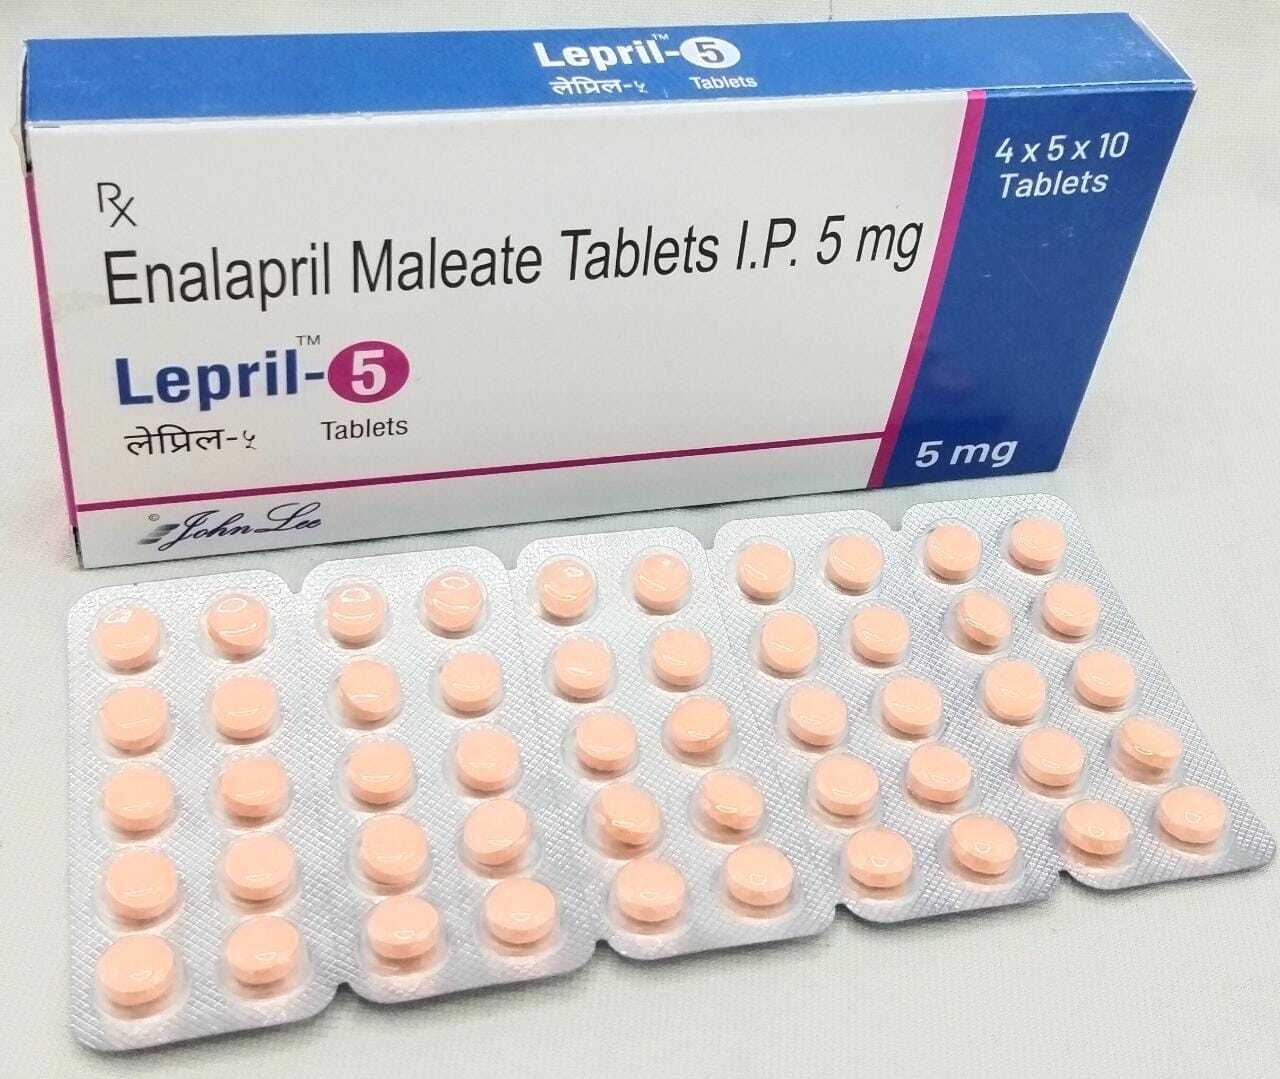 Enalapril maleate Tablets